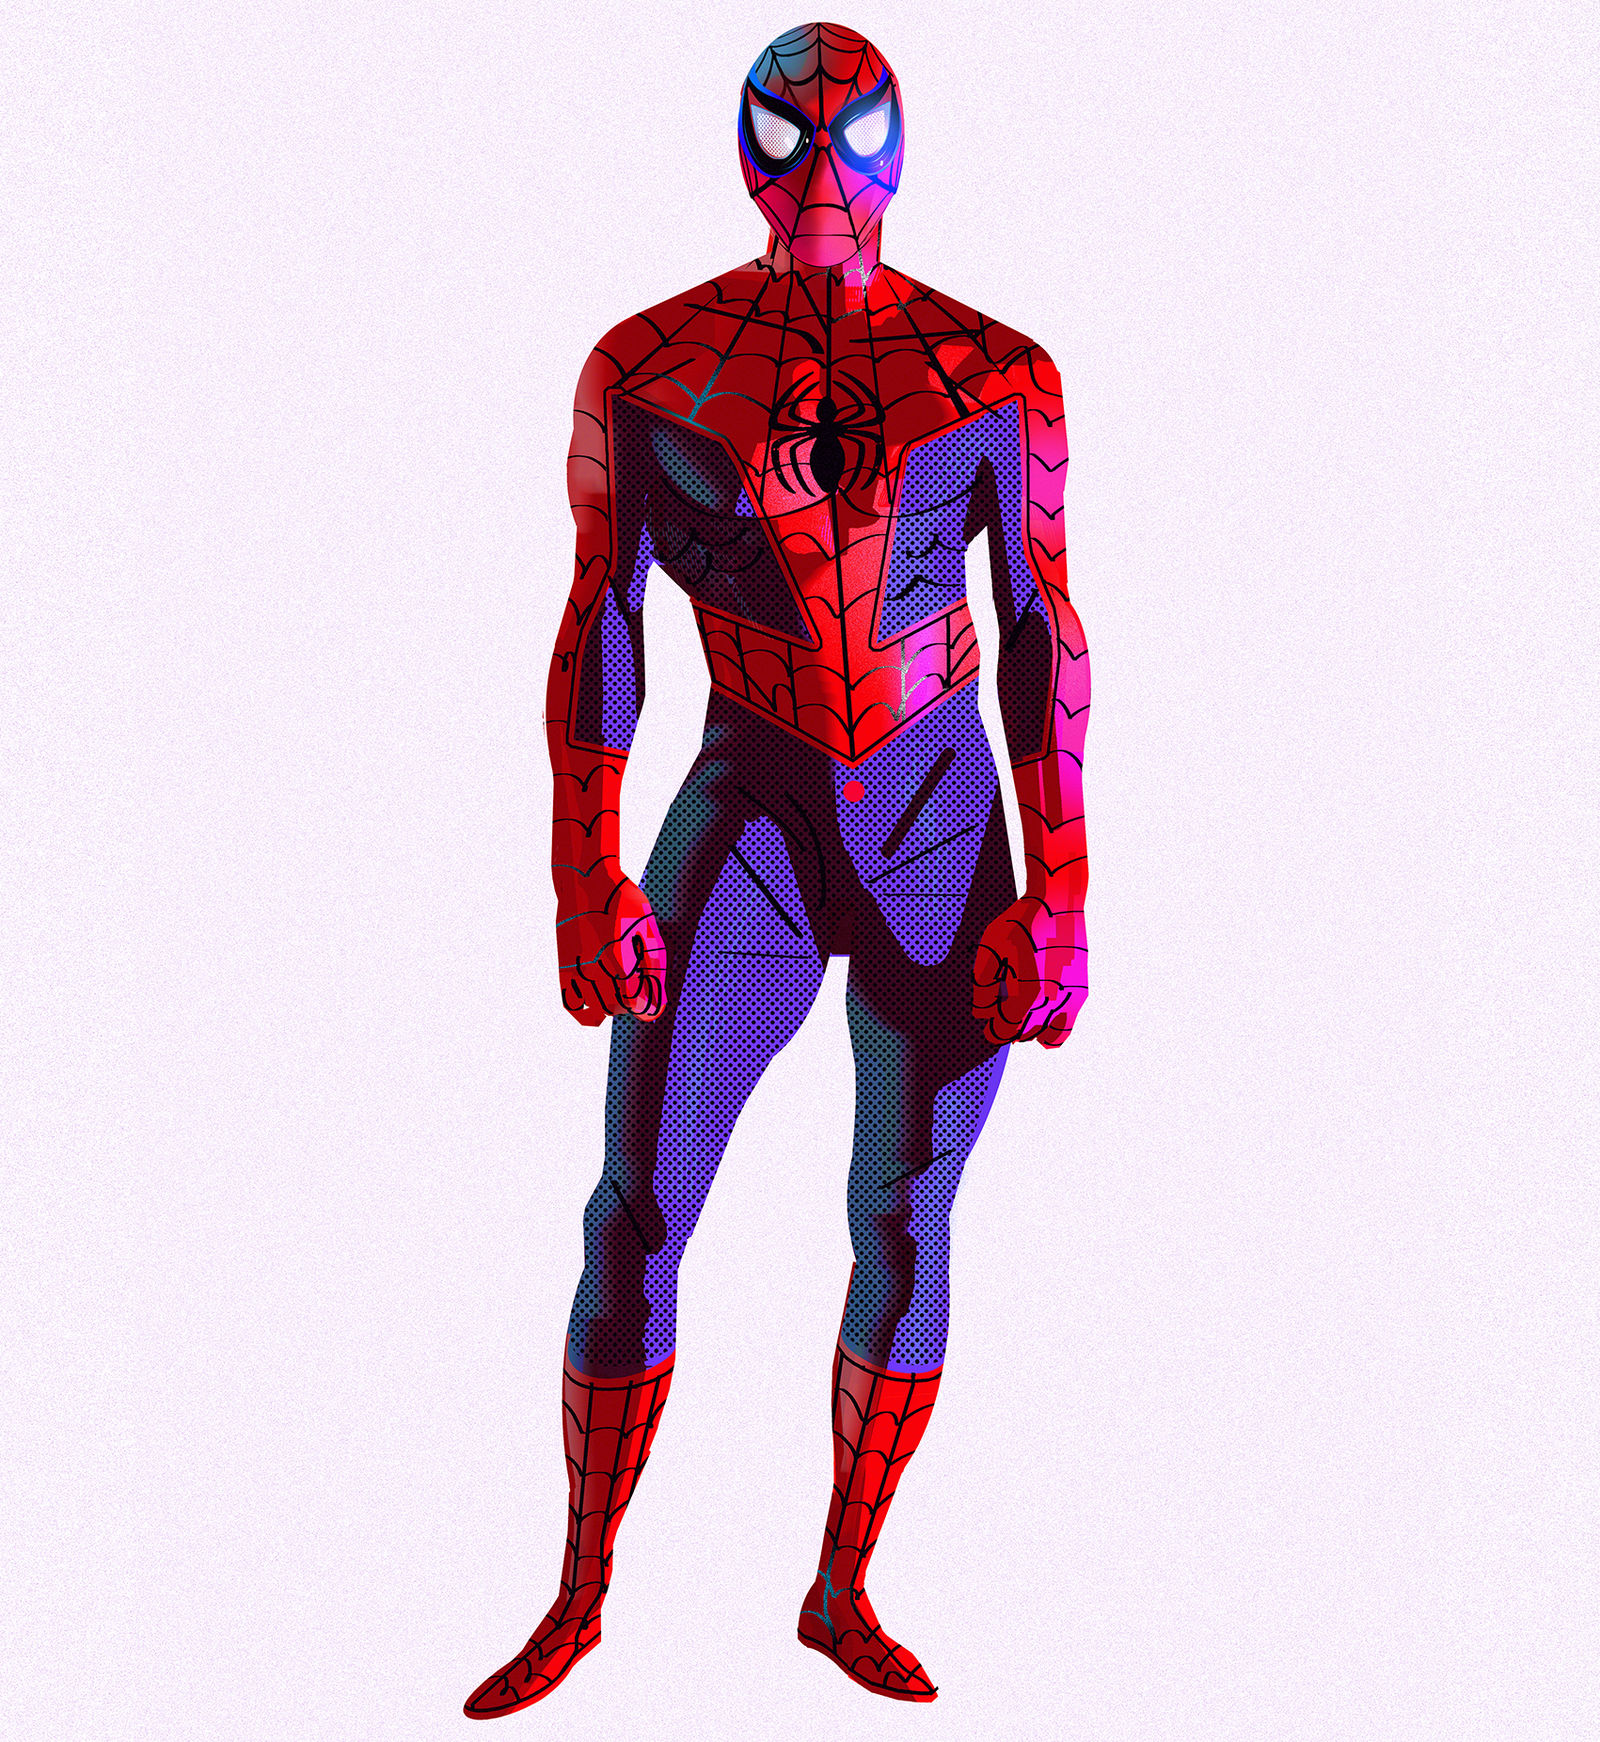 Spider-Man: Into the Spider-Verse Concept Art by Alberto Mielgo